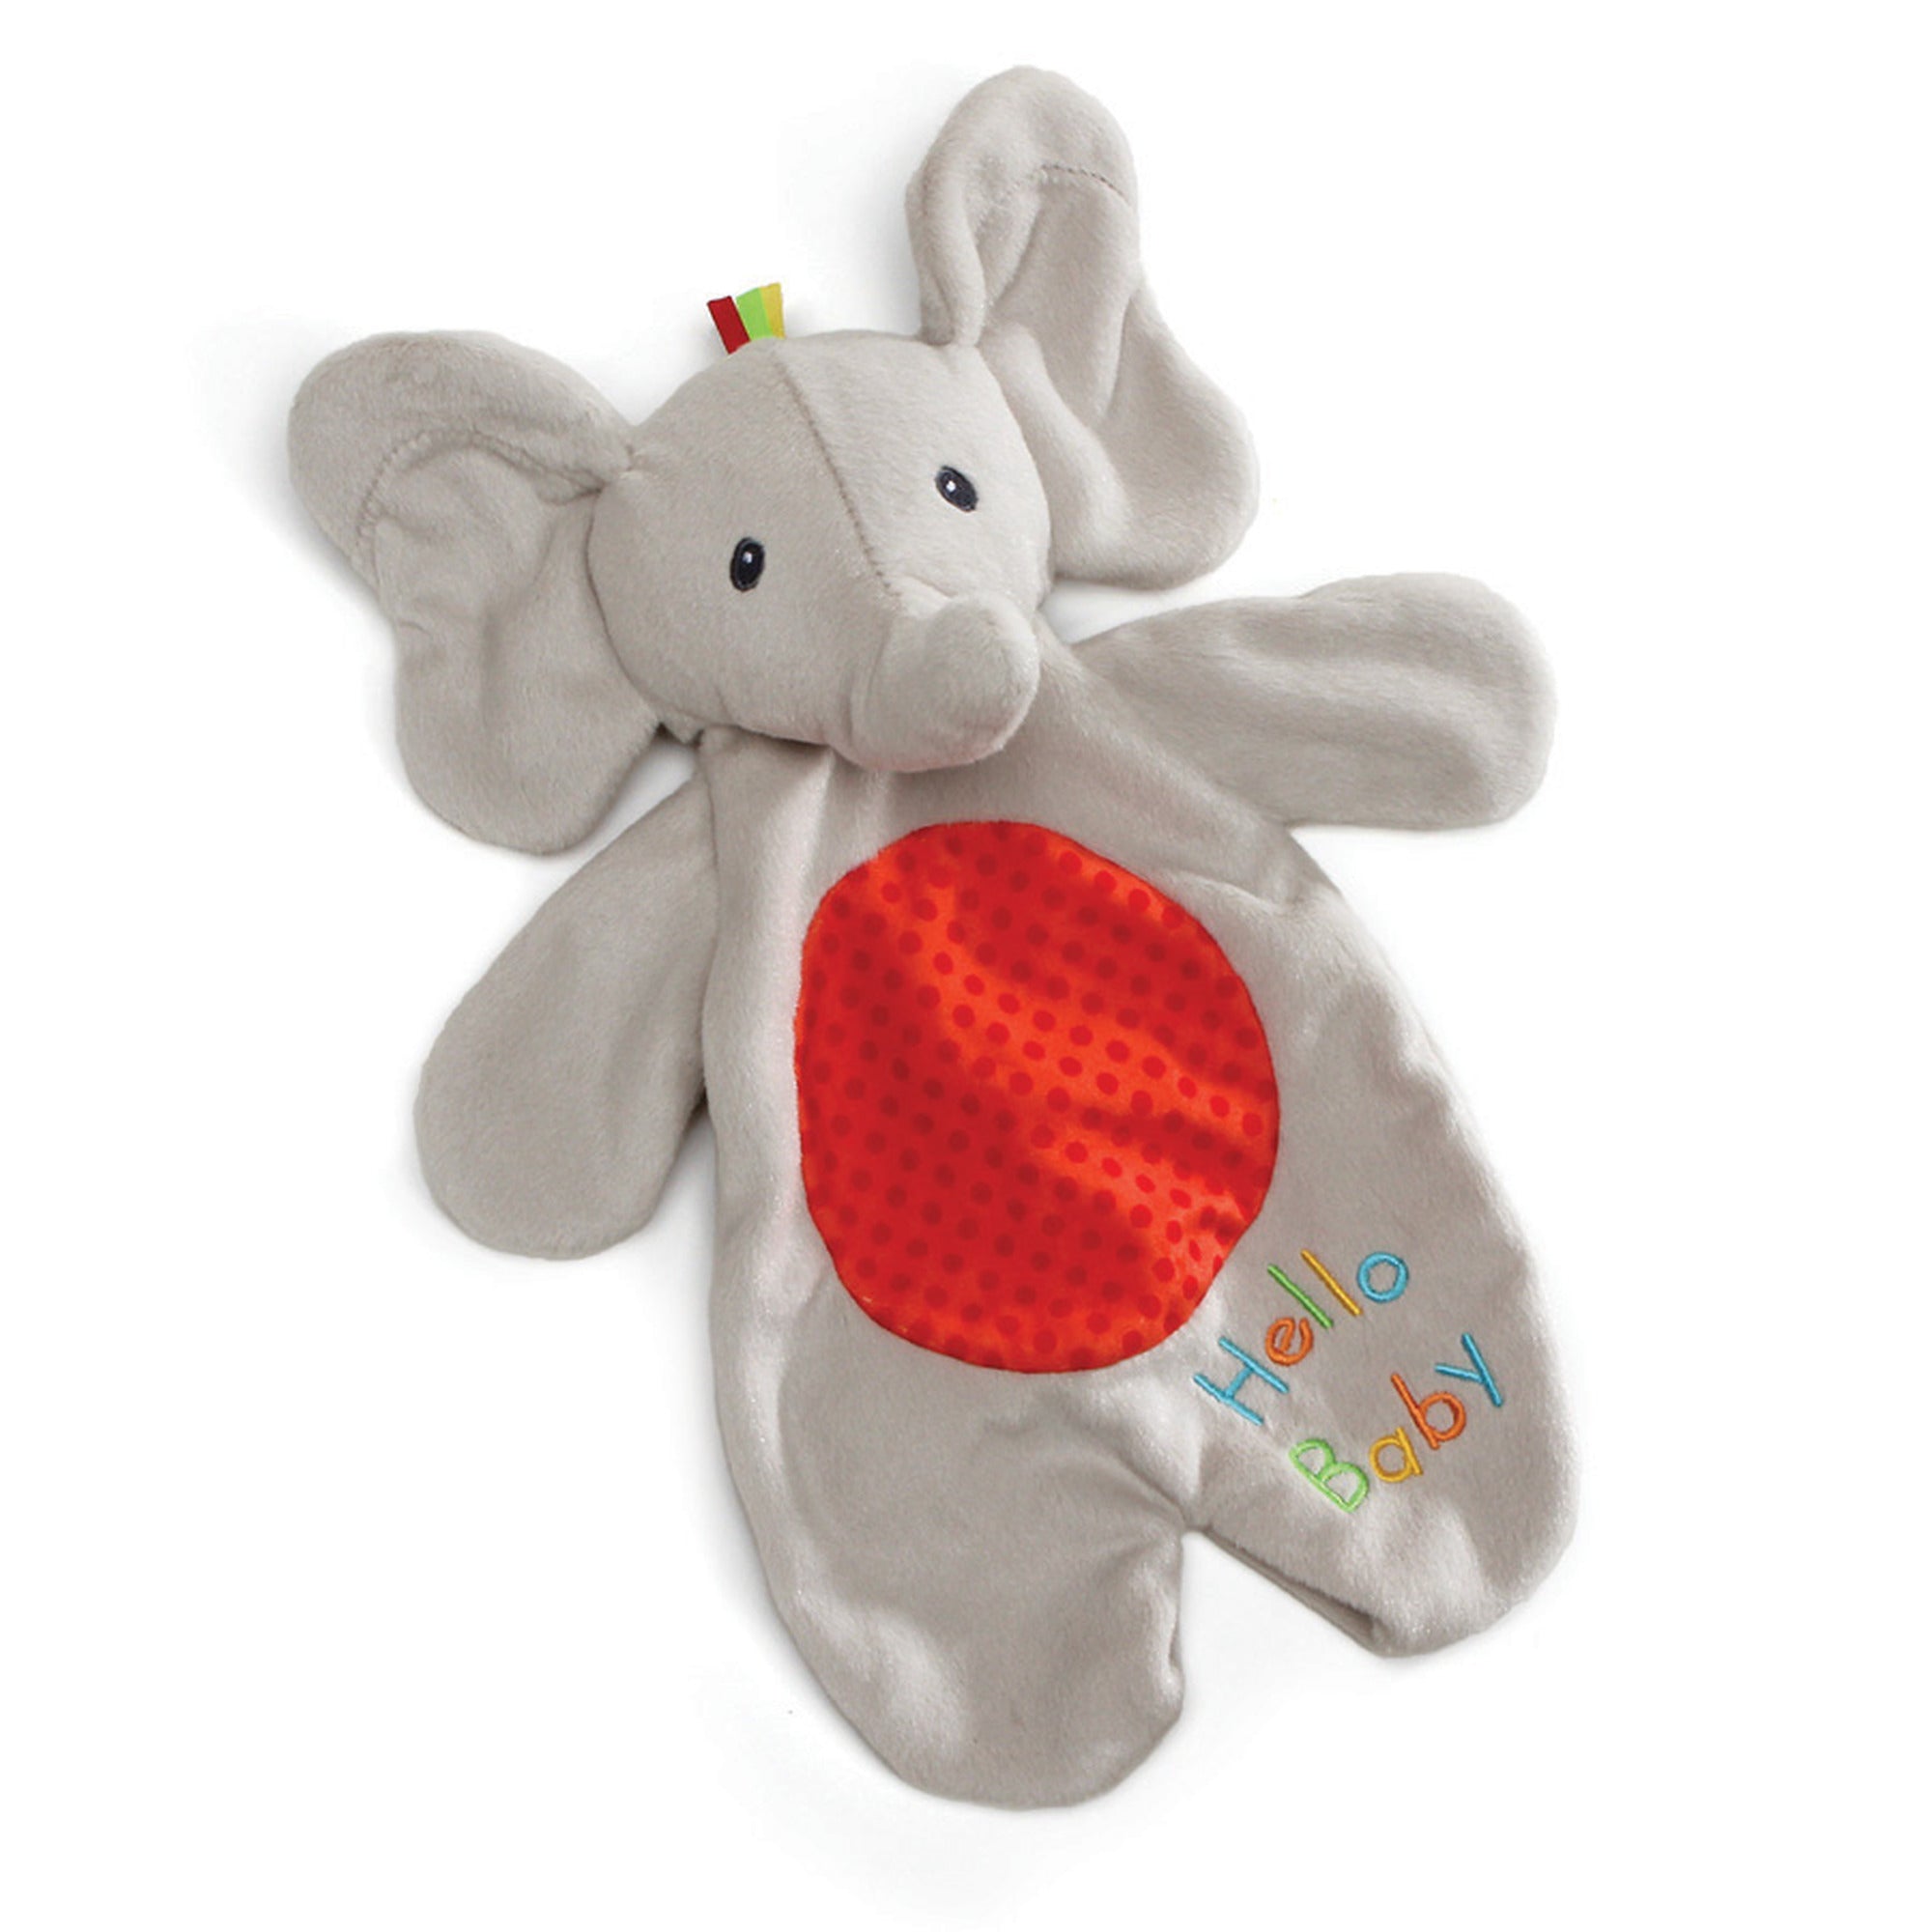 gund baby elephant stuffed toy